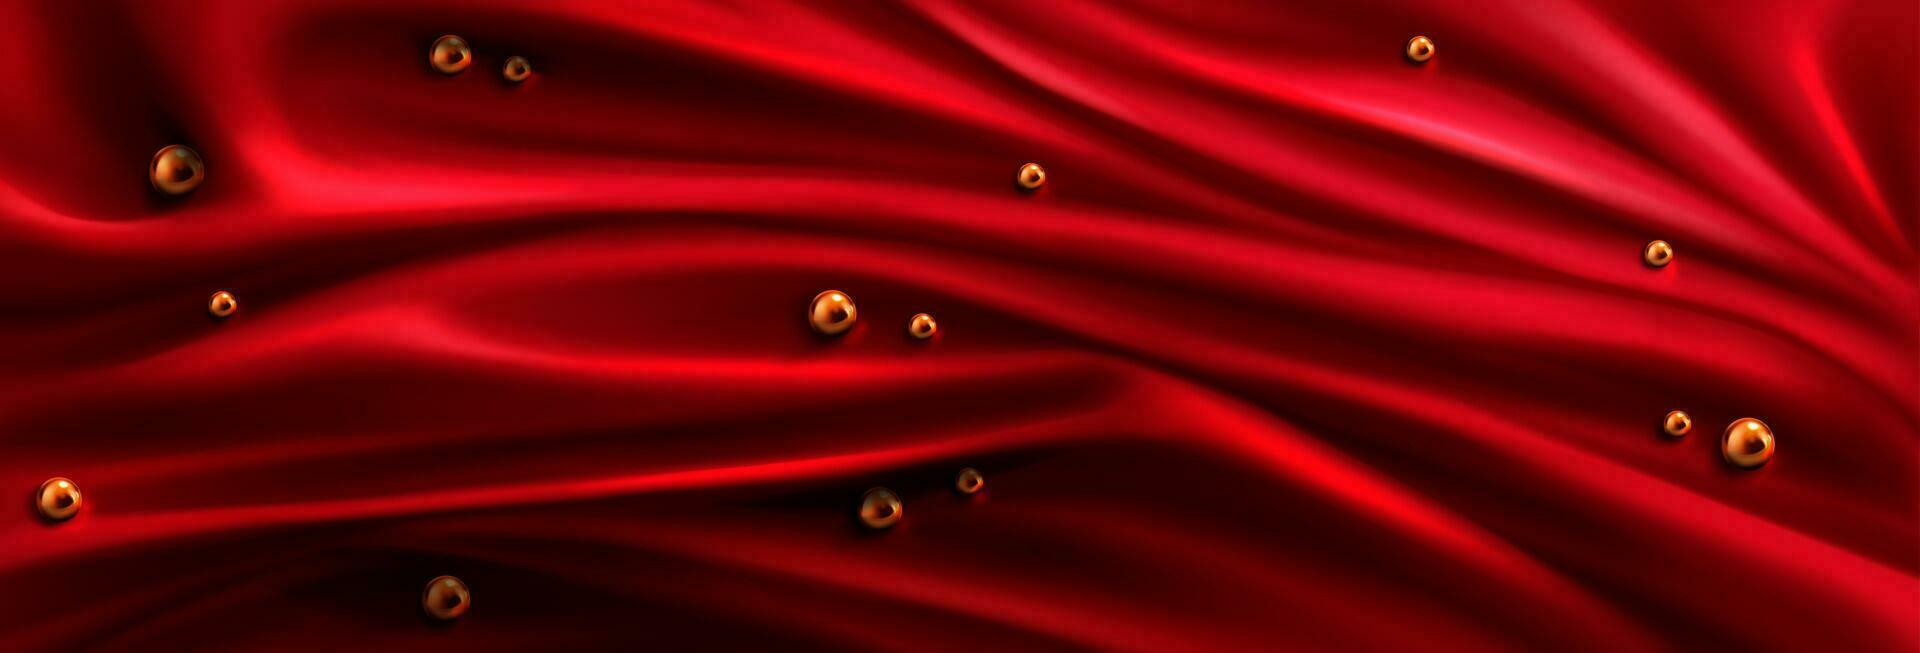 rot Seide Stoff Hintergrund, Satin- Stoff Textur vektor